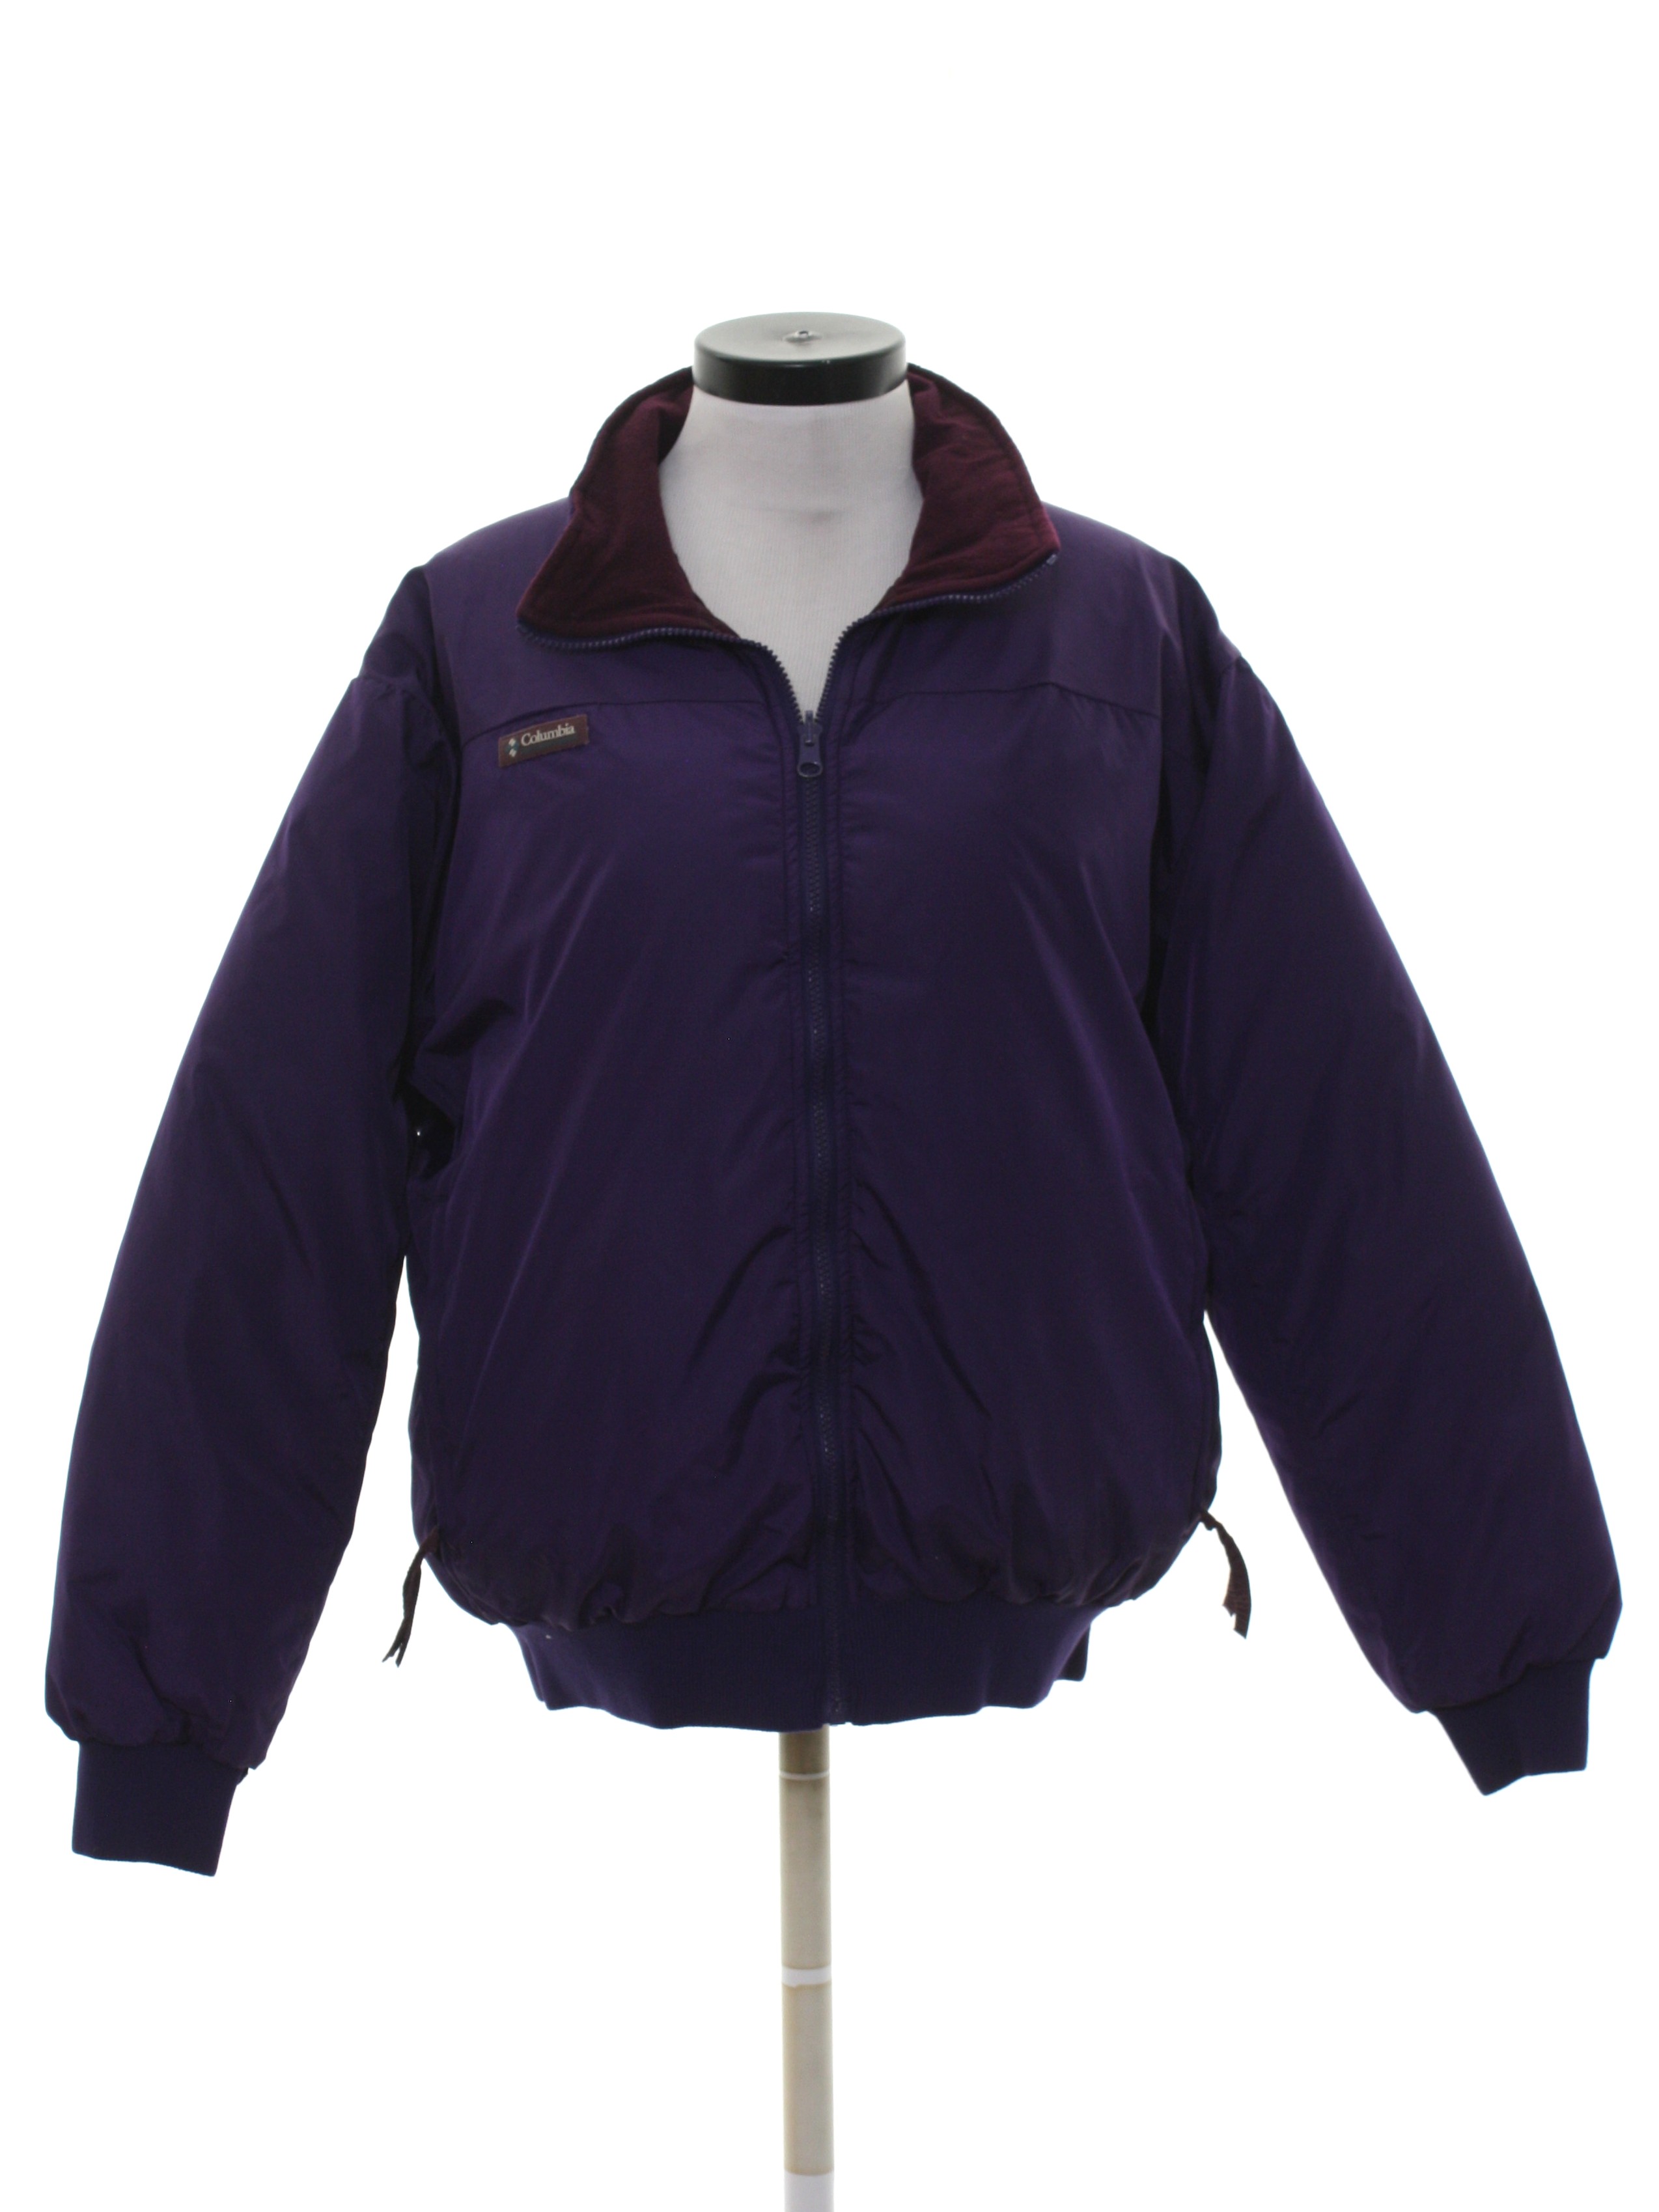 1990s Columbia Jacket: 90s -Columbia- Womens purple background